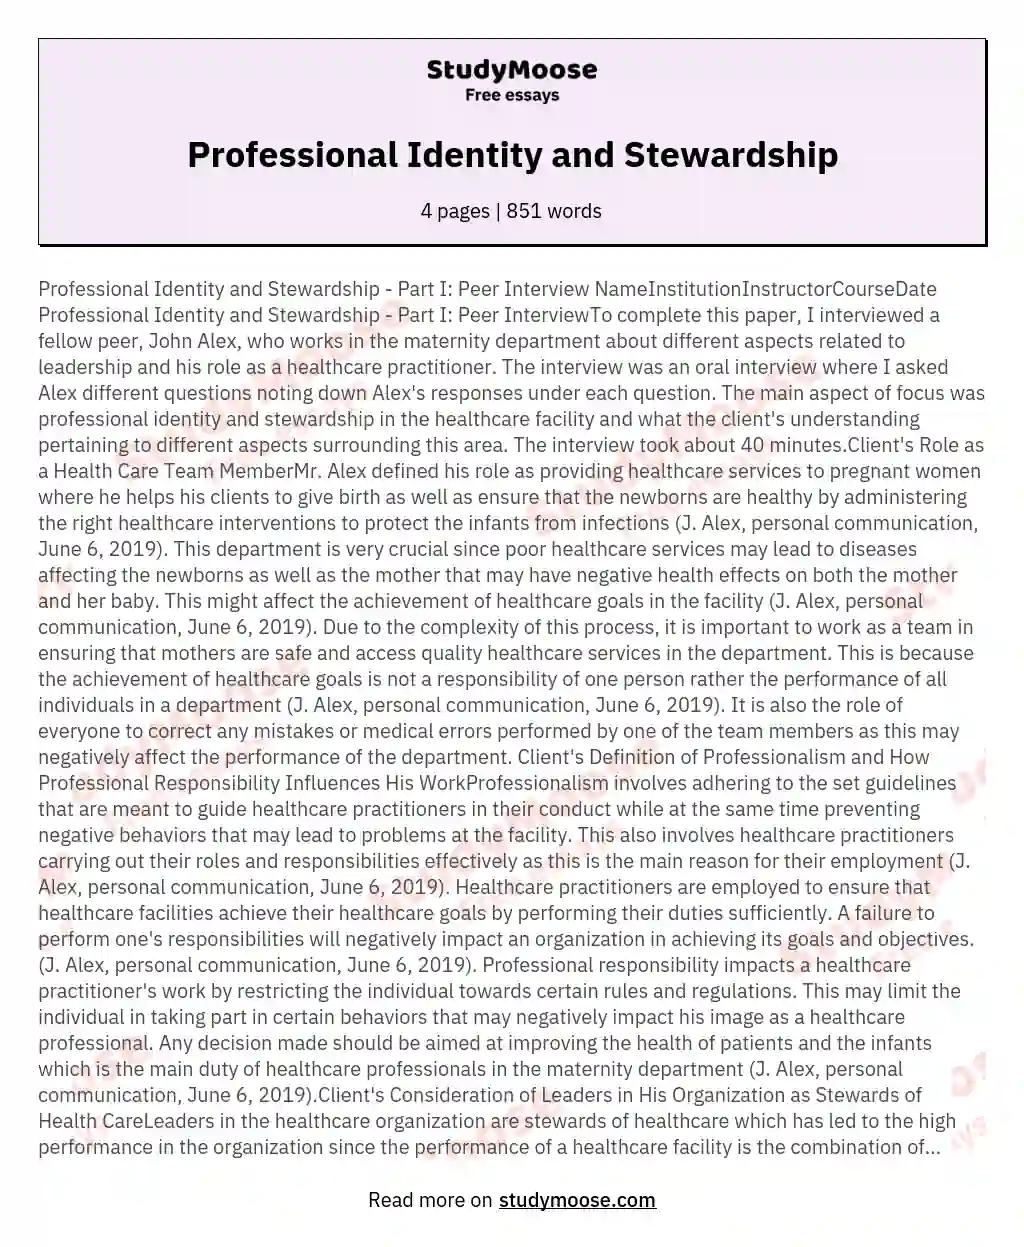 Professional Identity and Stewardship essay